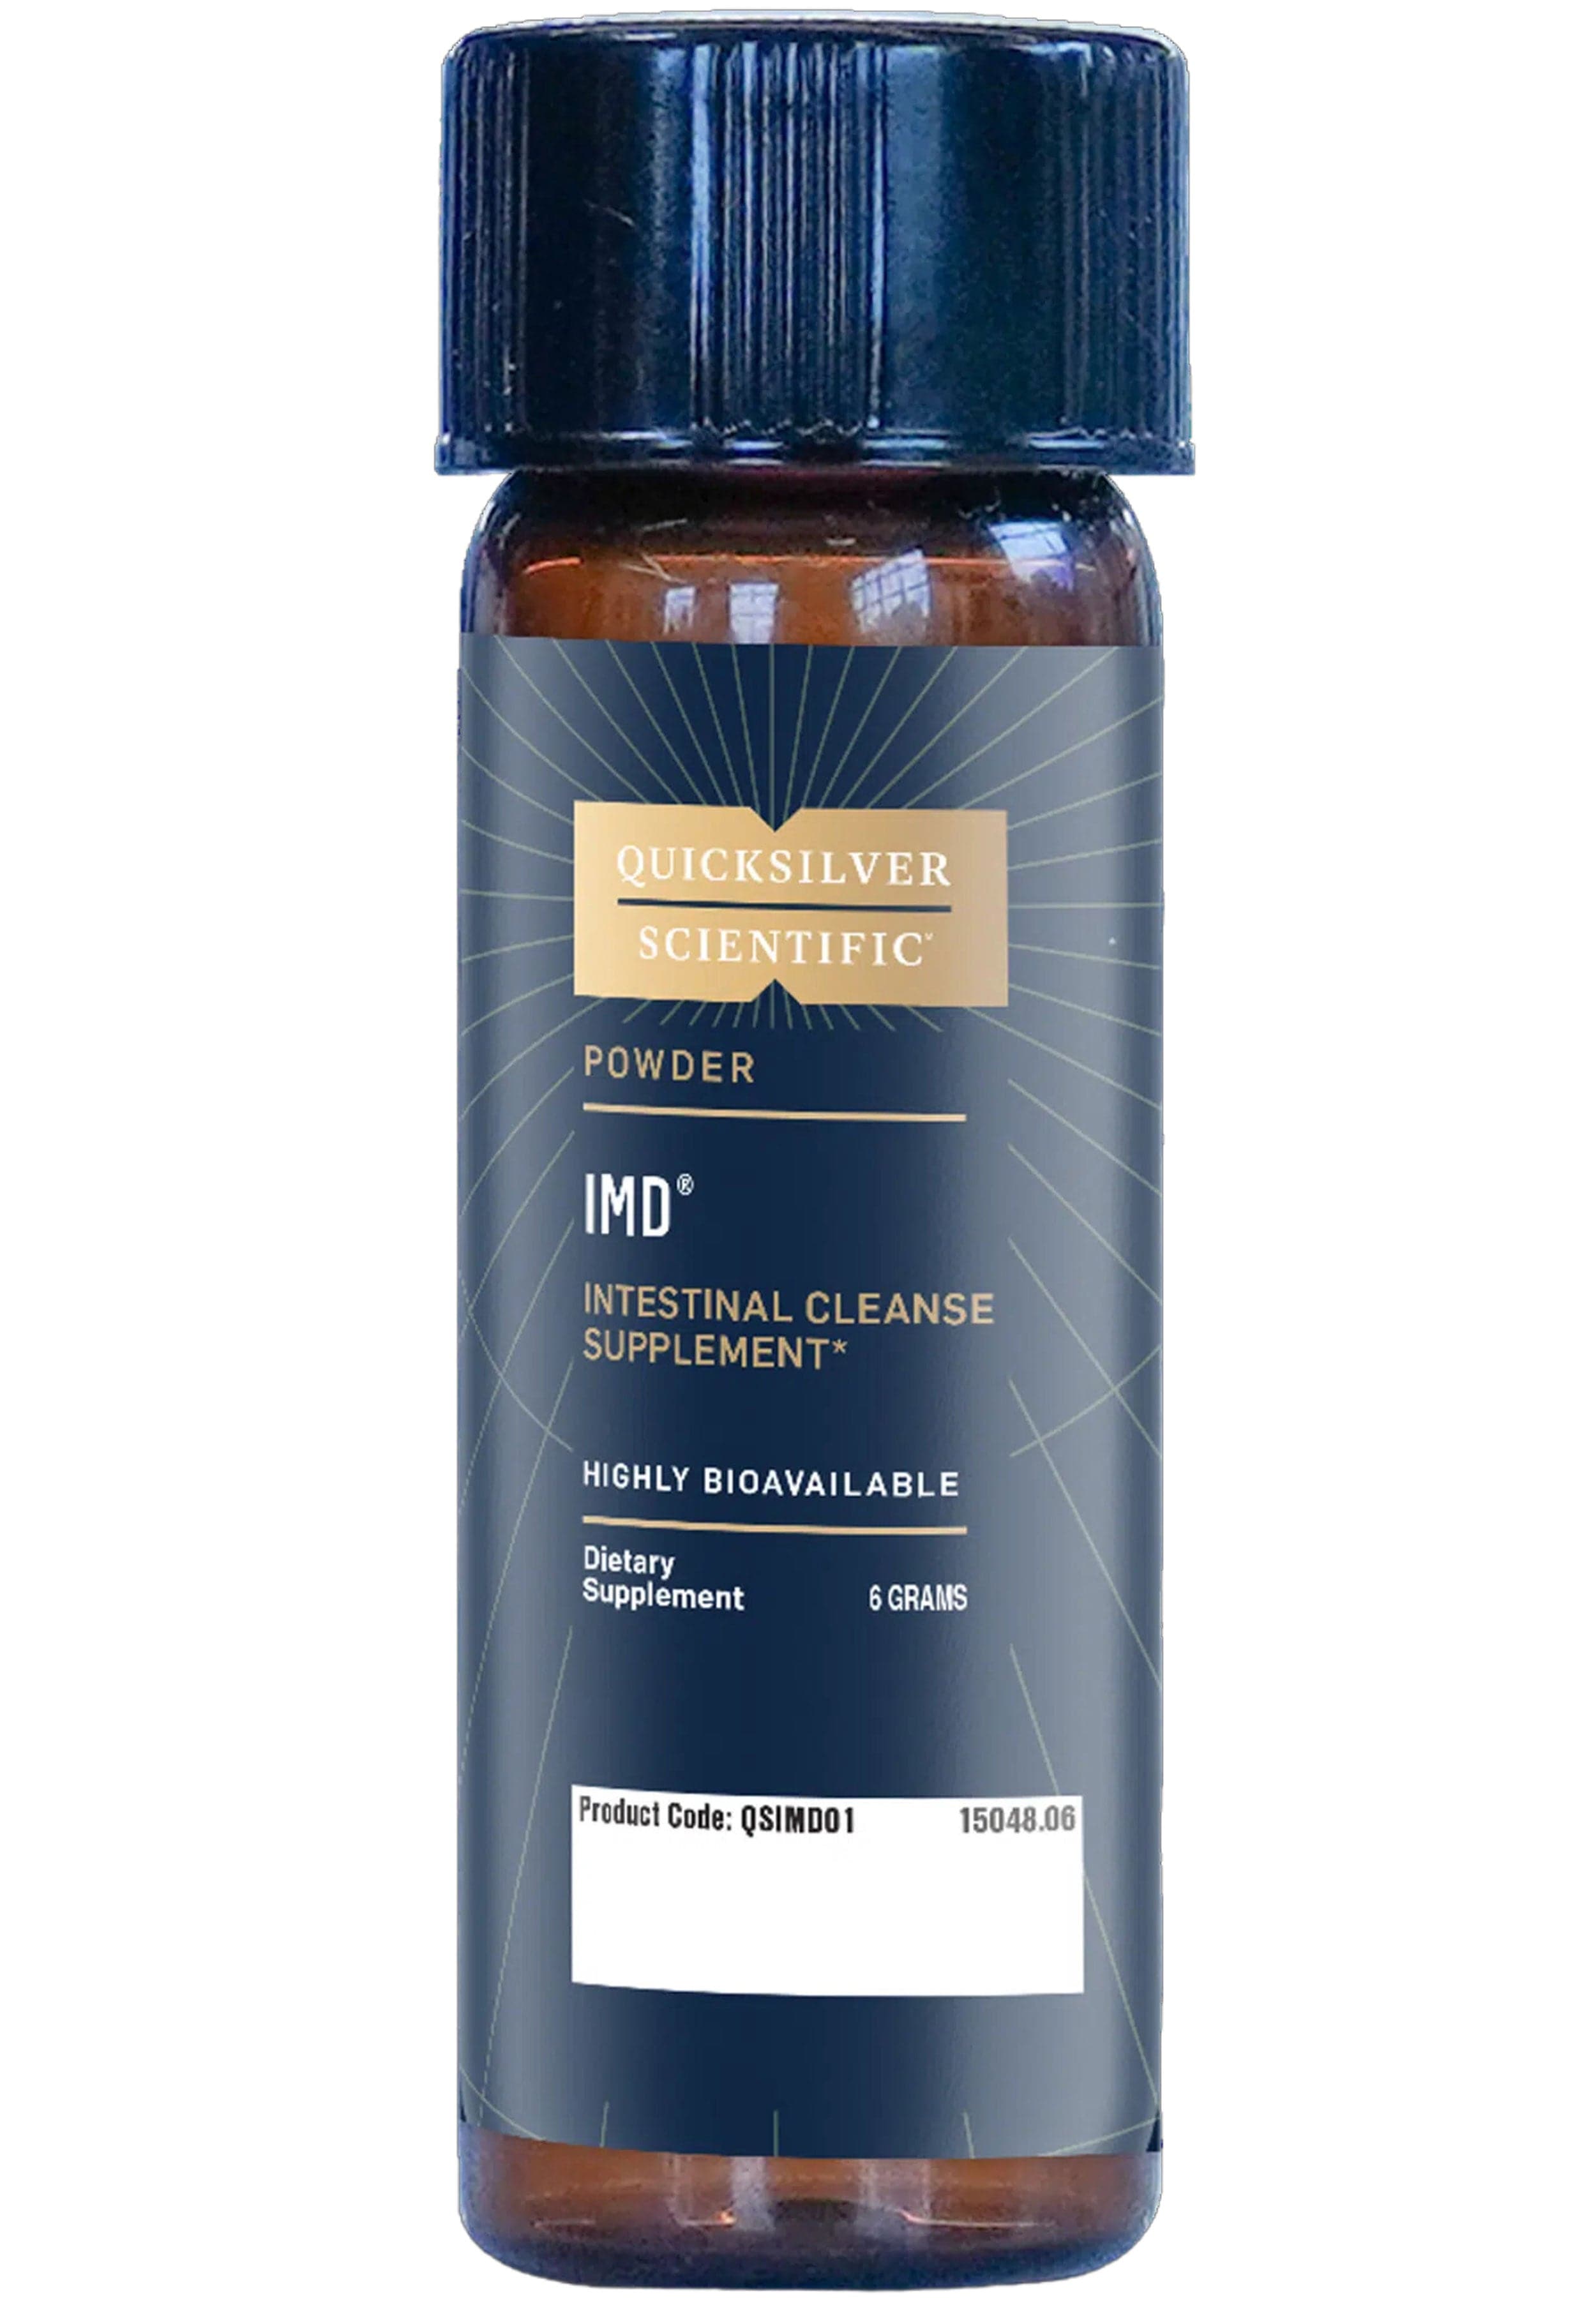 Quicksilver Scientific IMD Intestinal Cleanse Powder